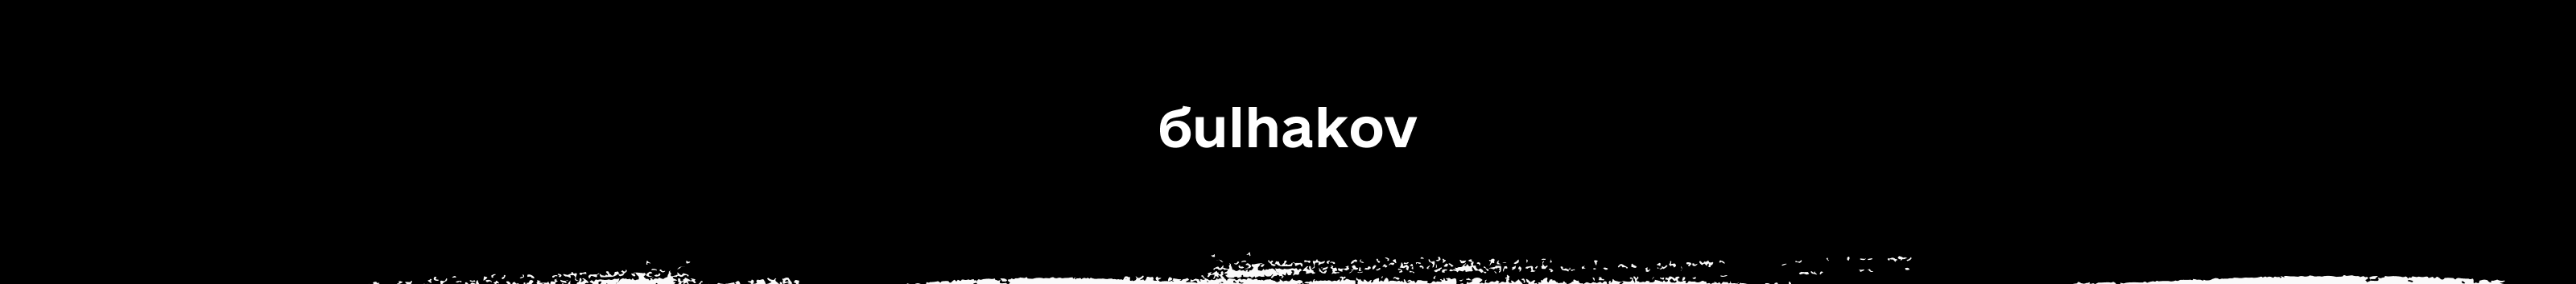 Artem Bulhakov's profile banner